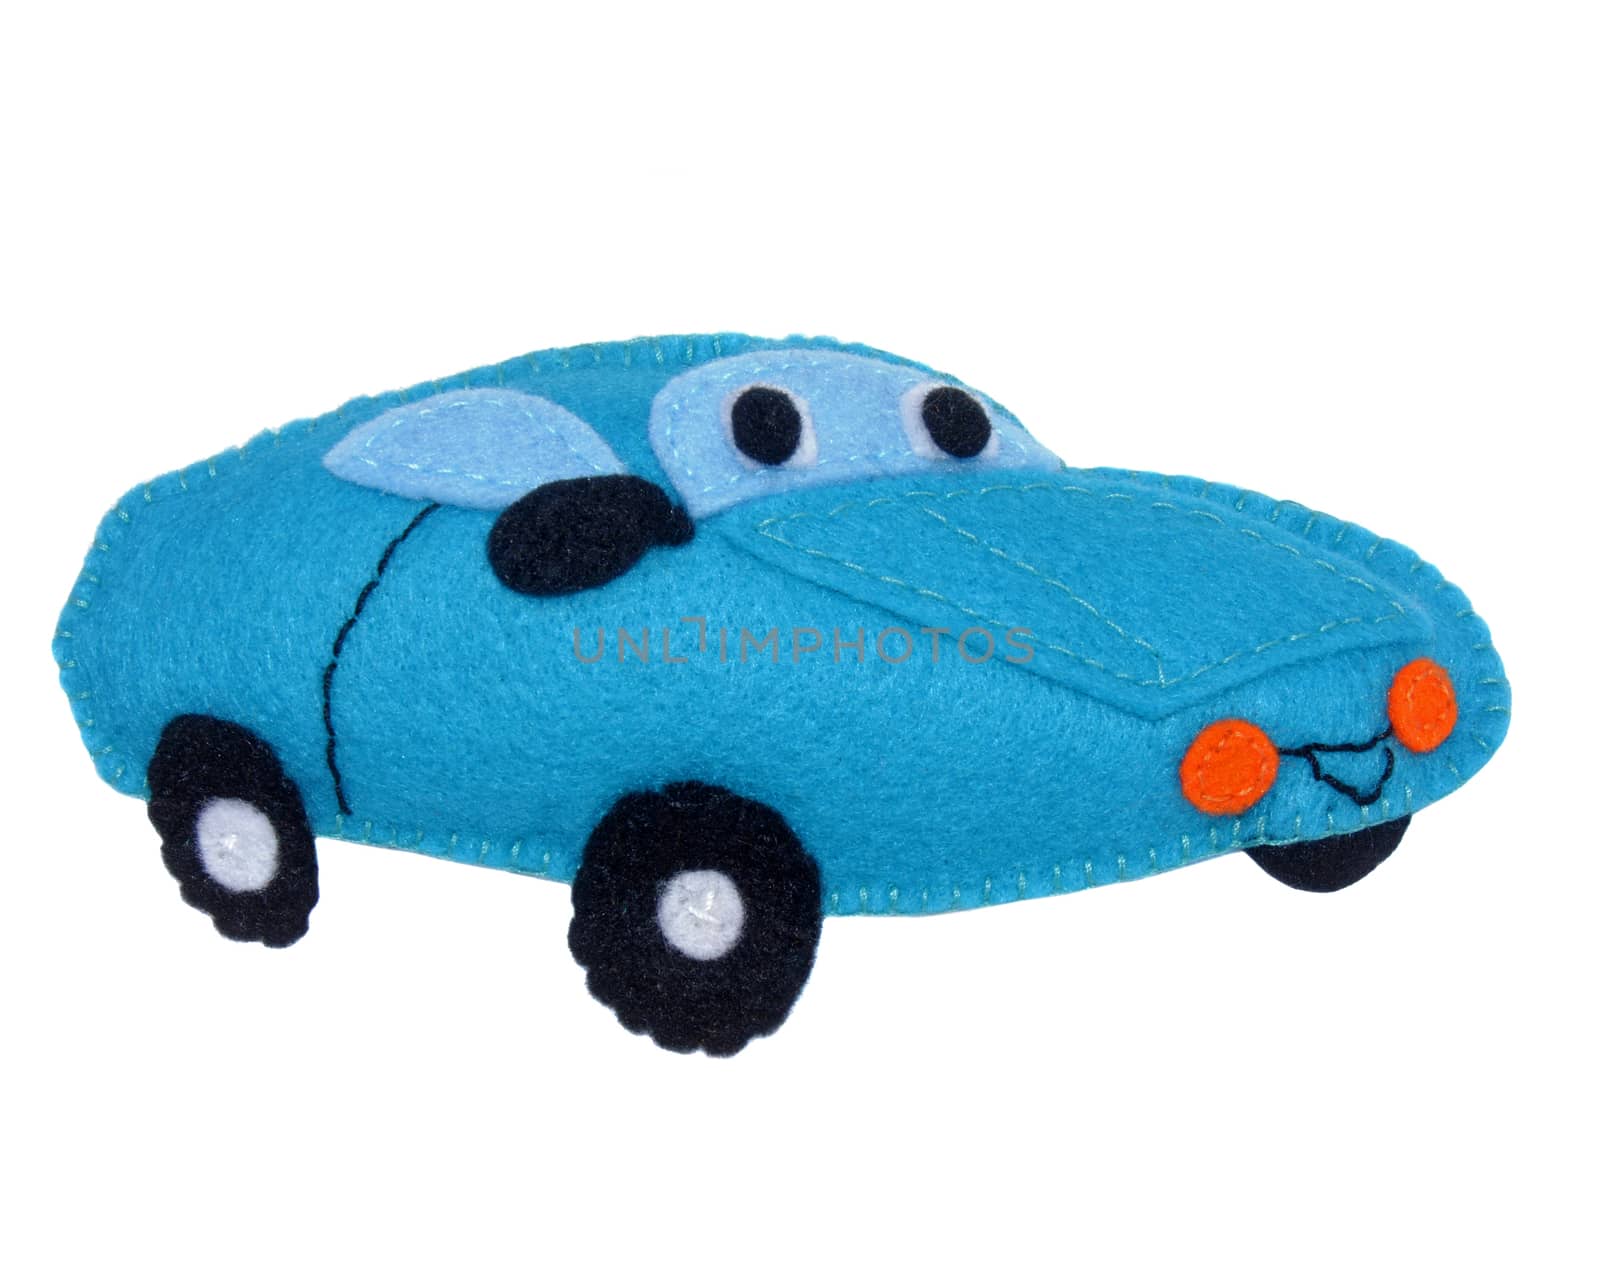 Blue car by sattva